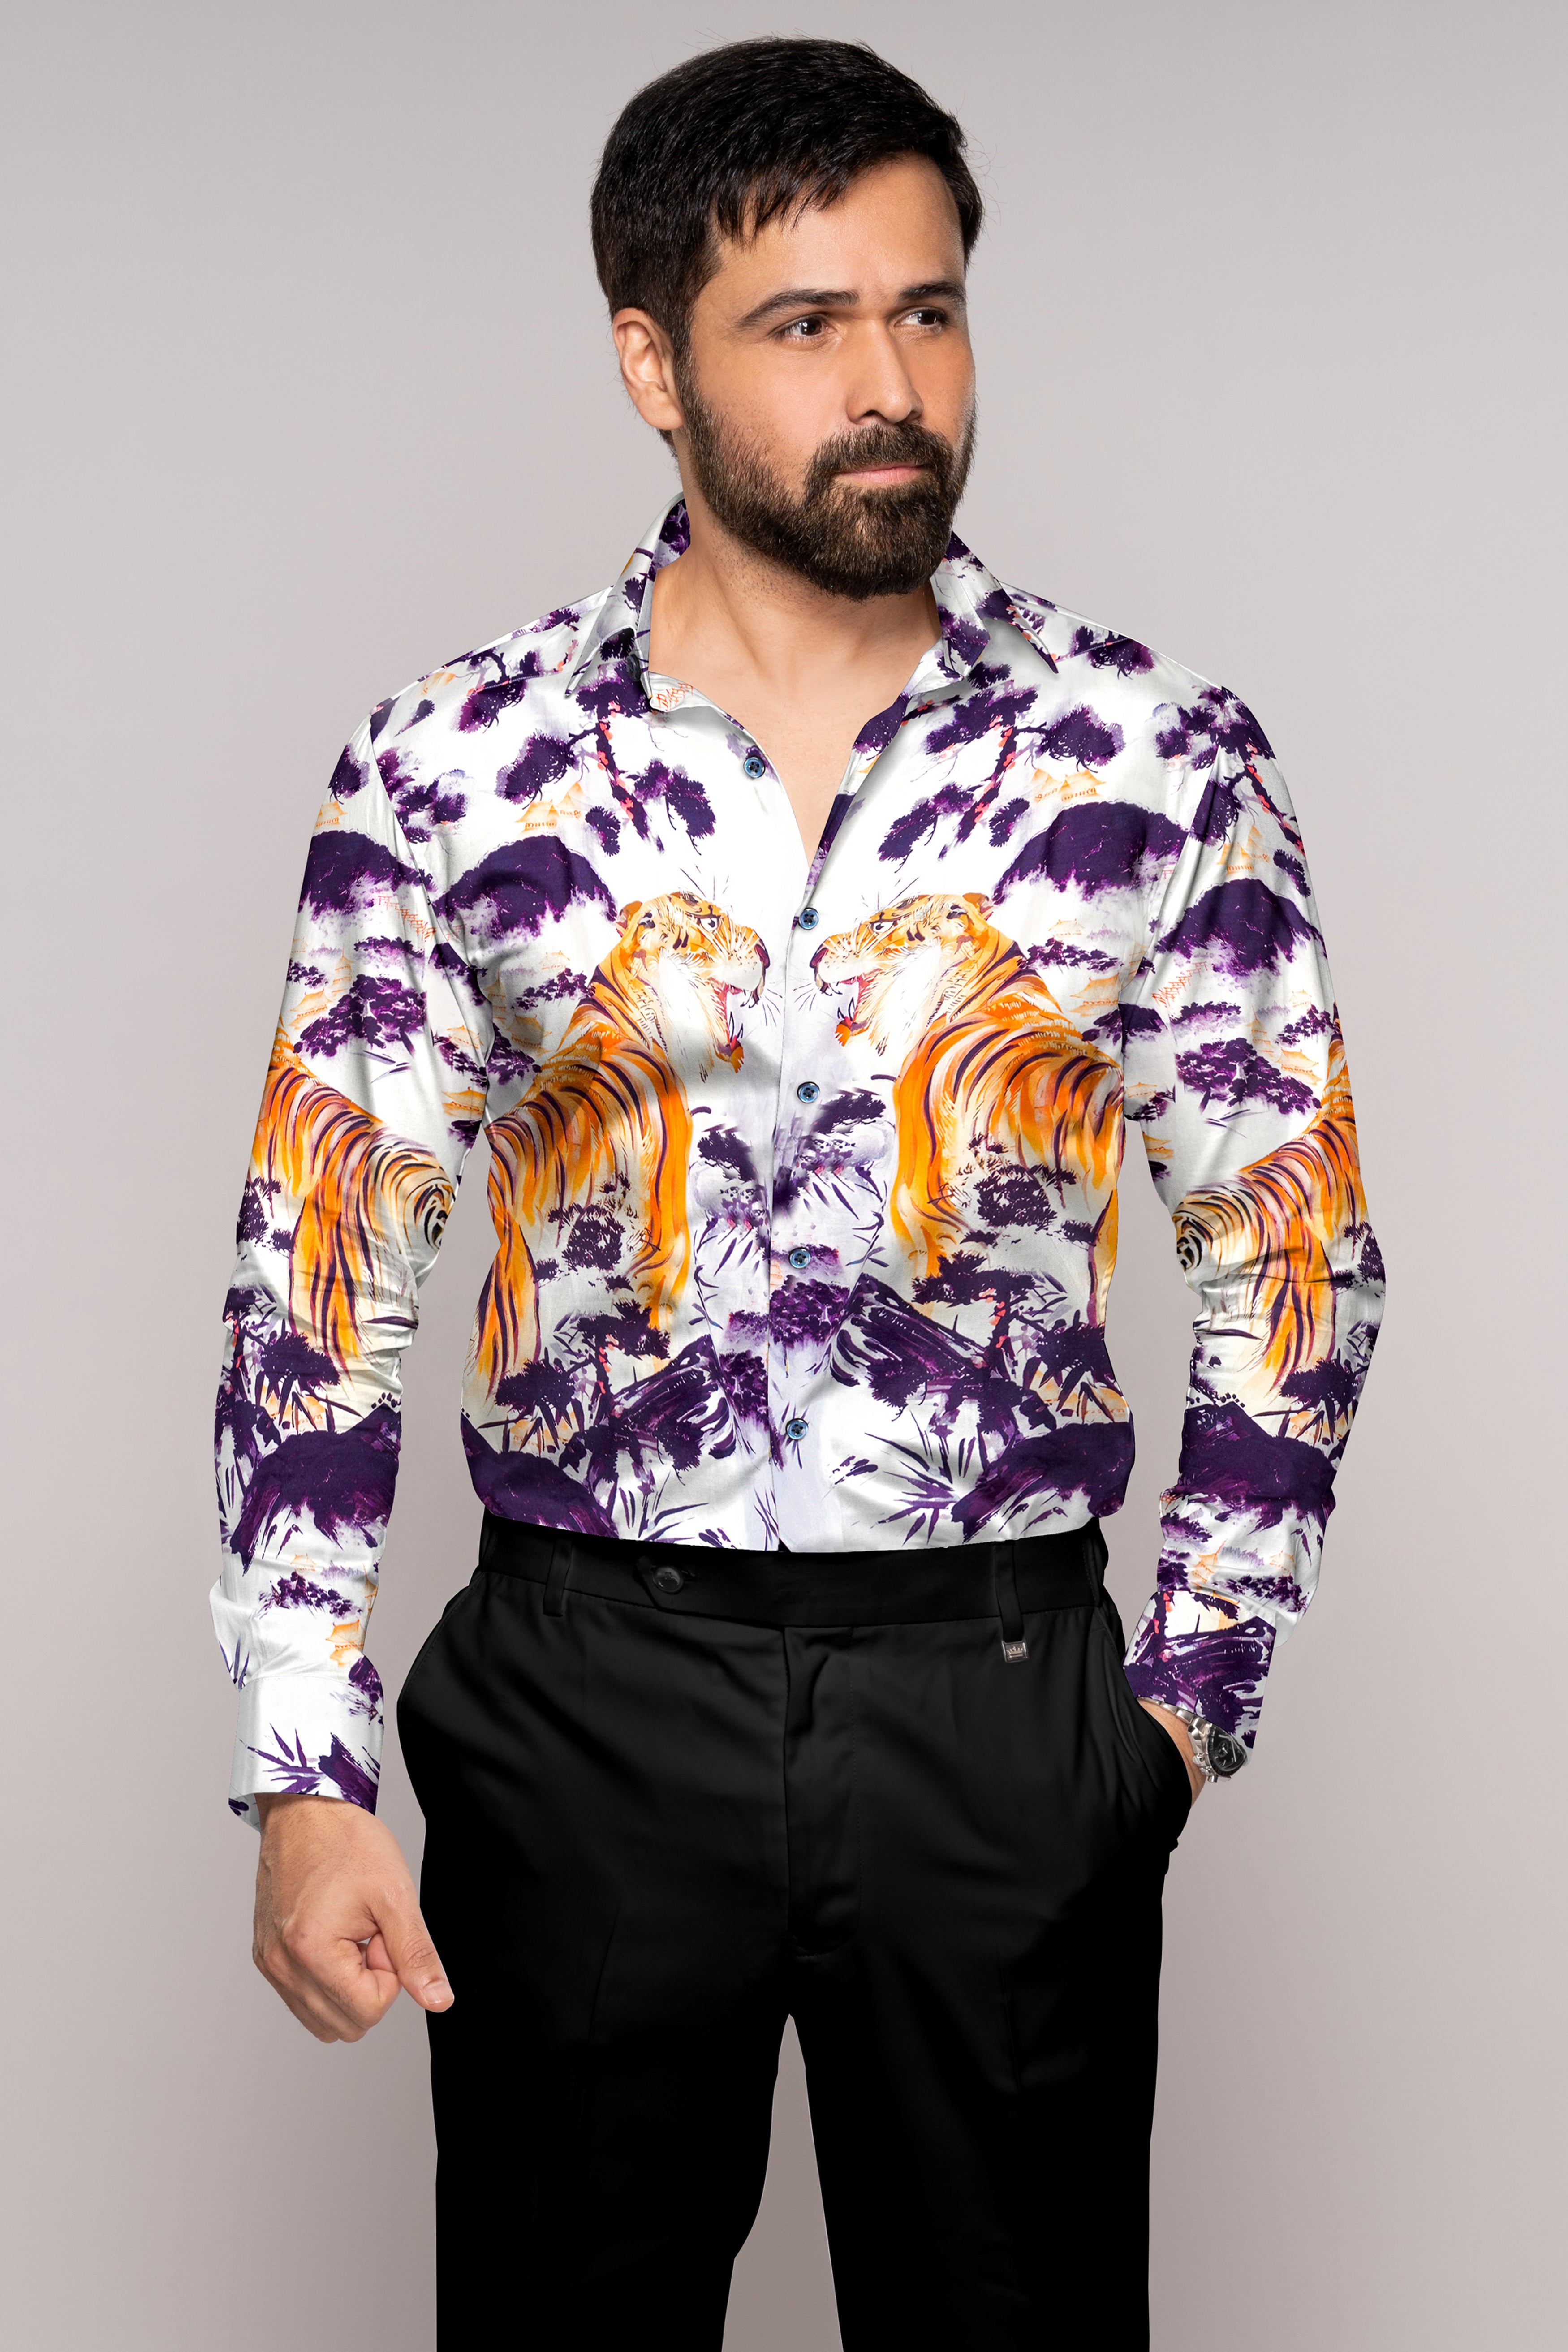 Bright White with Regalia Purple and Tangerine Orange Tigers and Trees Printed Subtle Sheen Super Soft Premium Cotton Designer Shirt